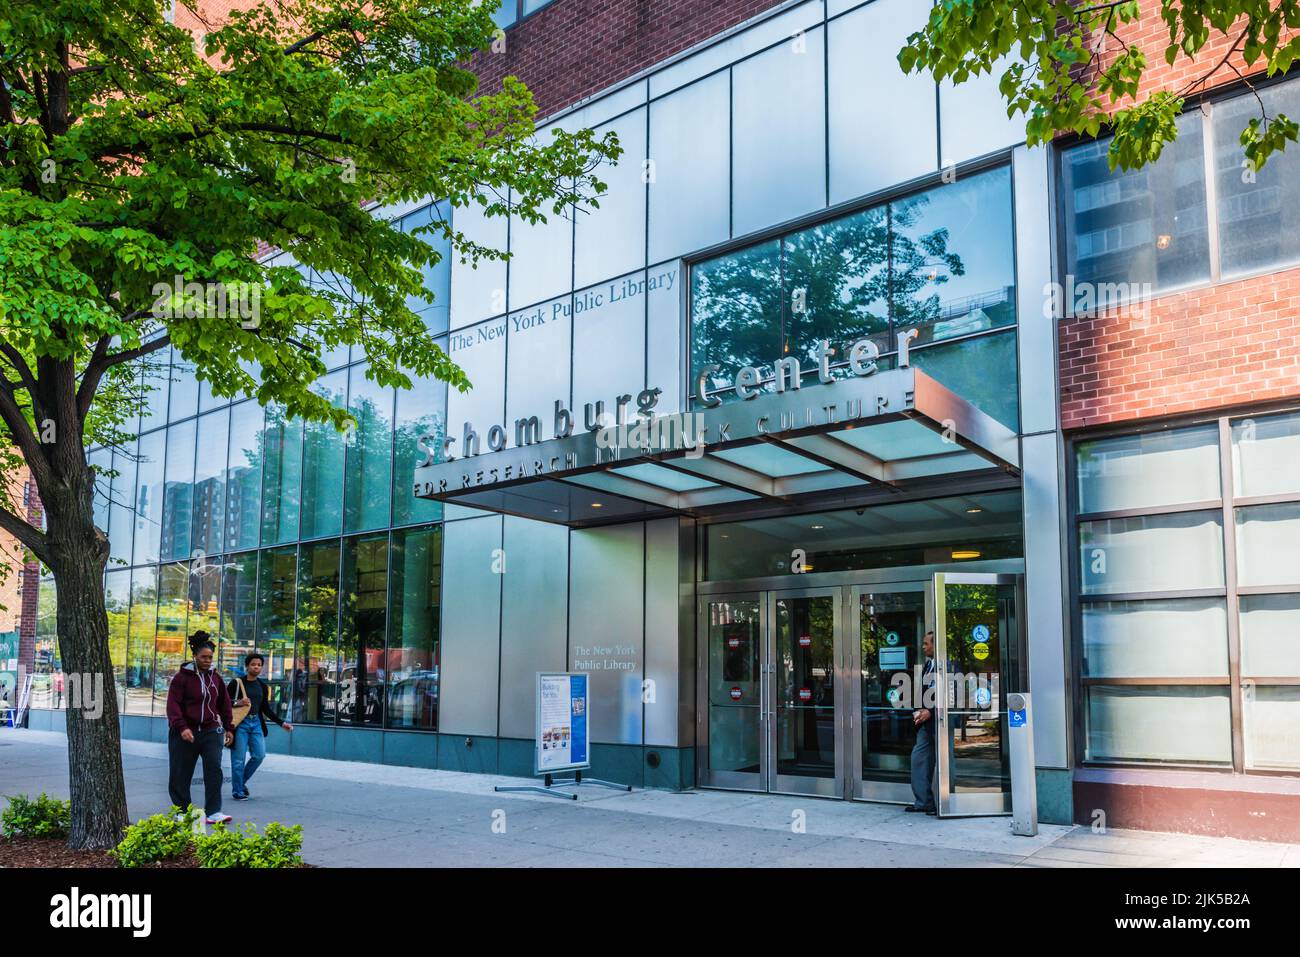 New York, NY/USA - 05-07-2016: Schomburg Research center in Harlem New York City. Stock Photo